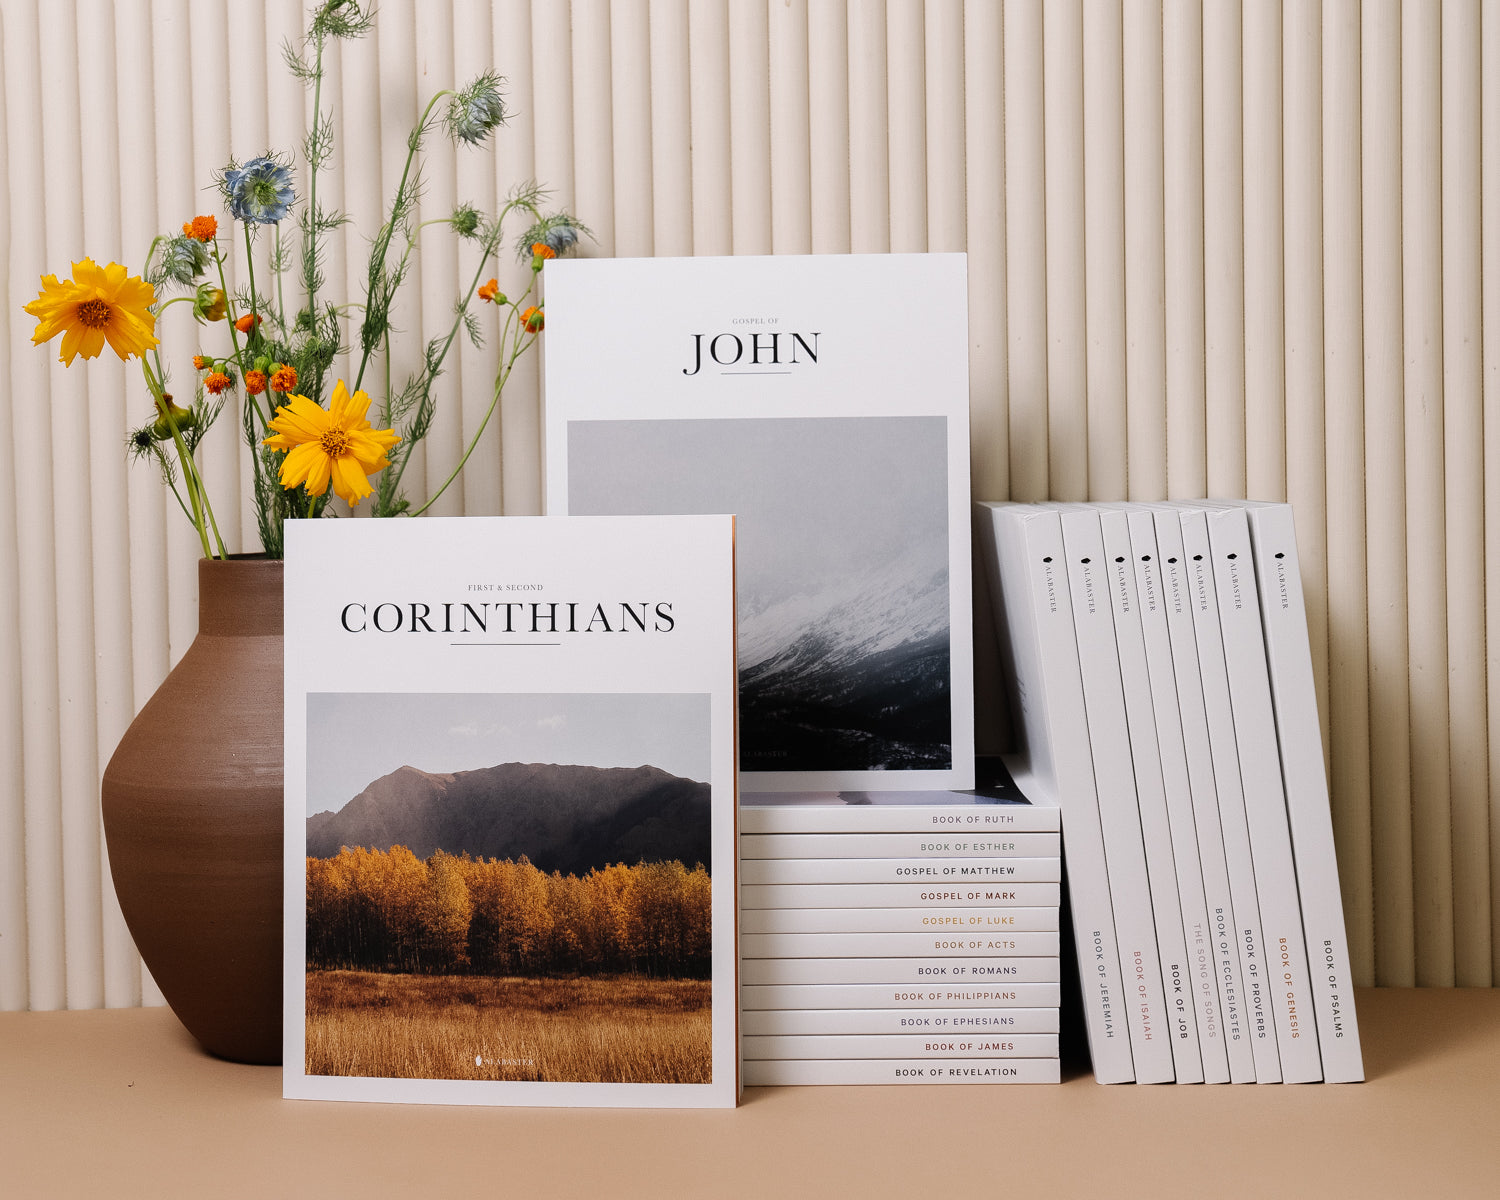 Alabaster books, including Corinthians and John